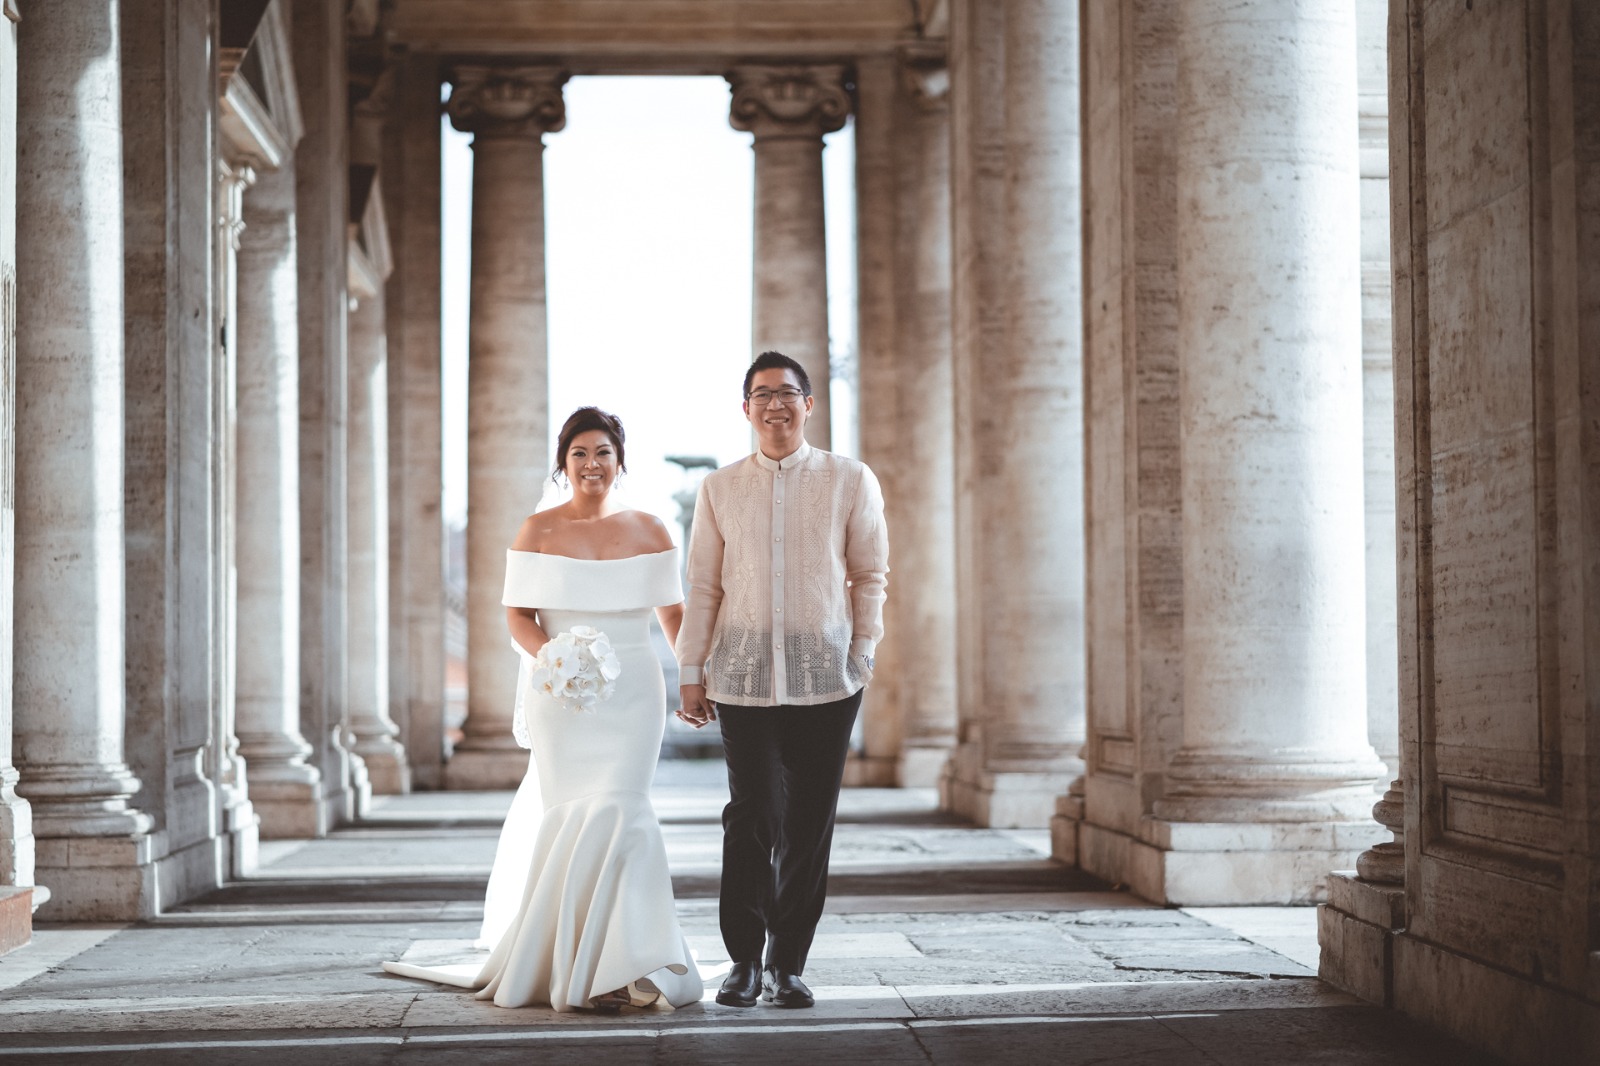 Wedding photographer in Rome